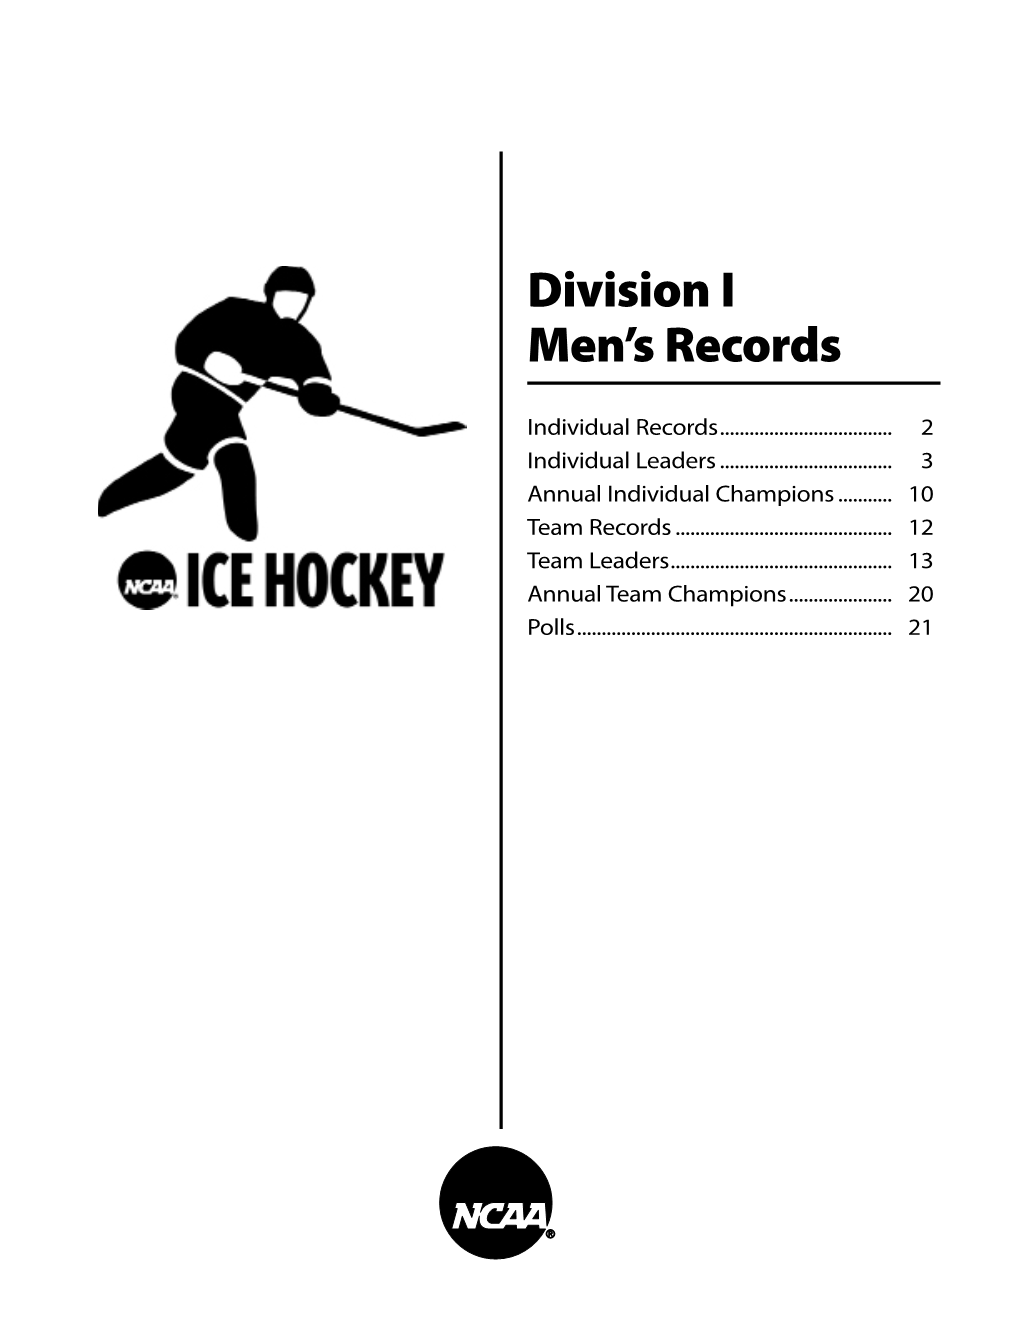 Division I Men's Records